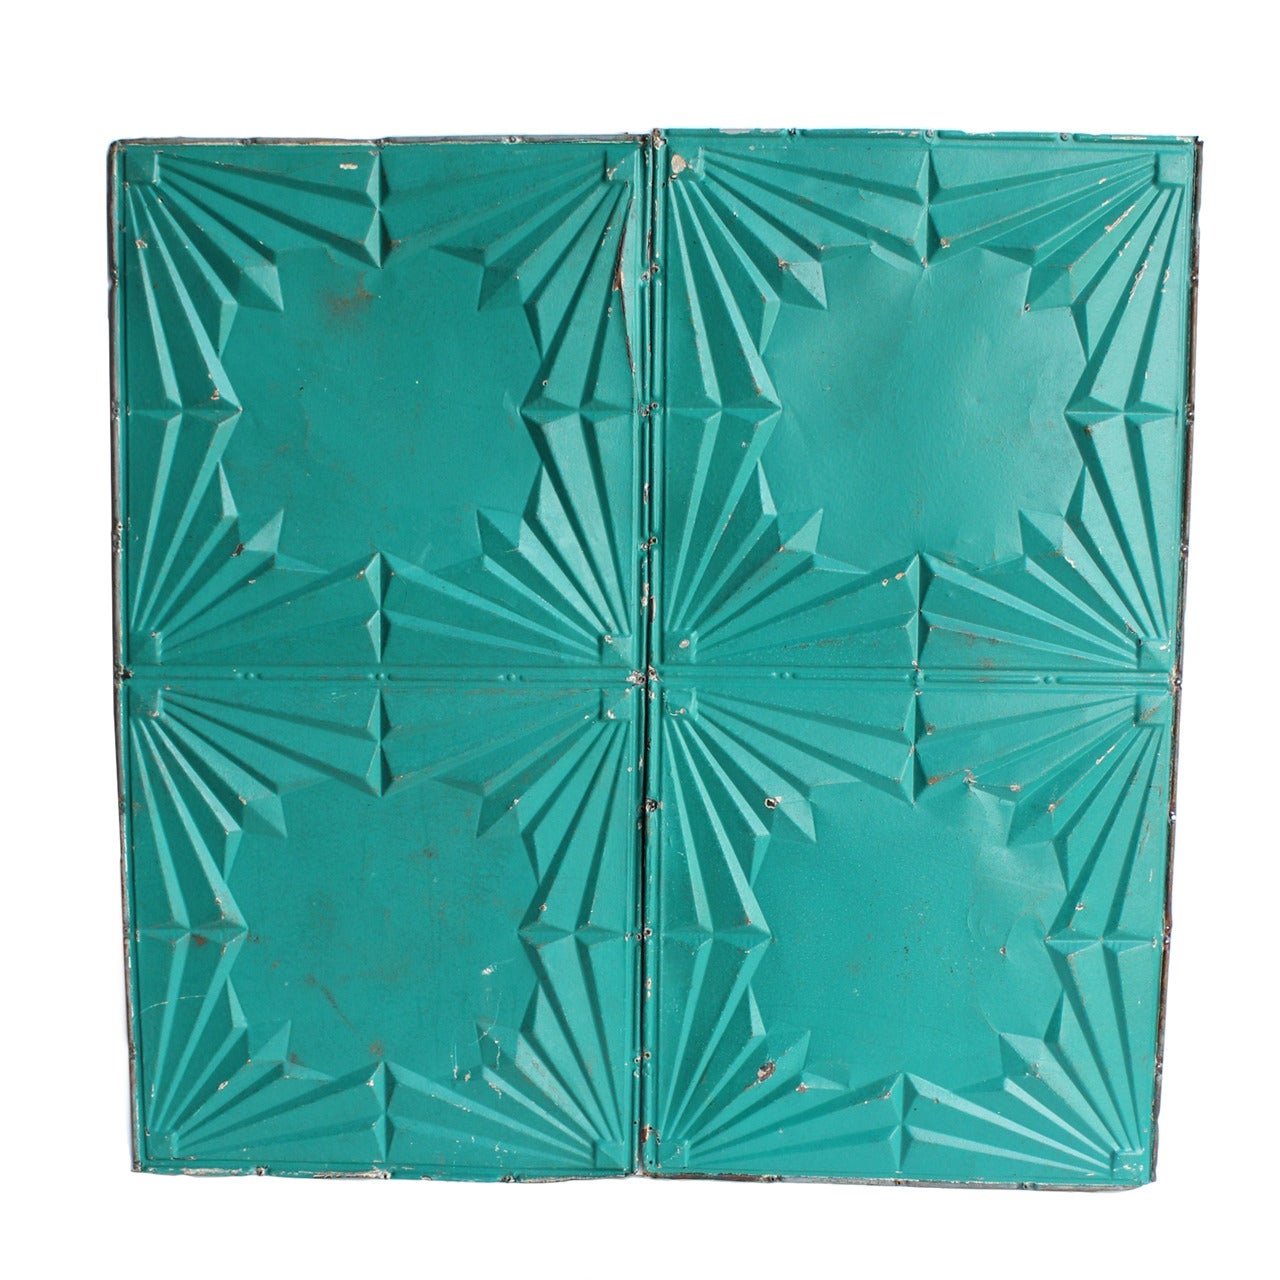 Antique Art Deco Ceiling Tin Tiles, more available